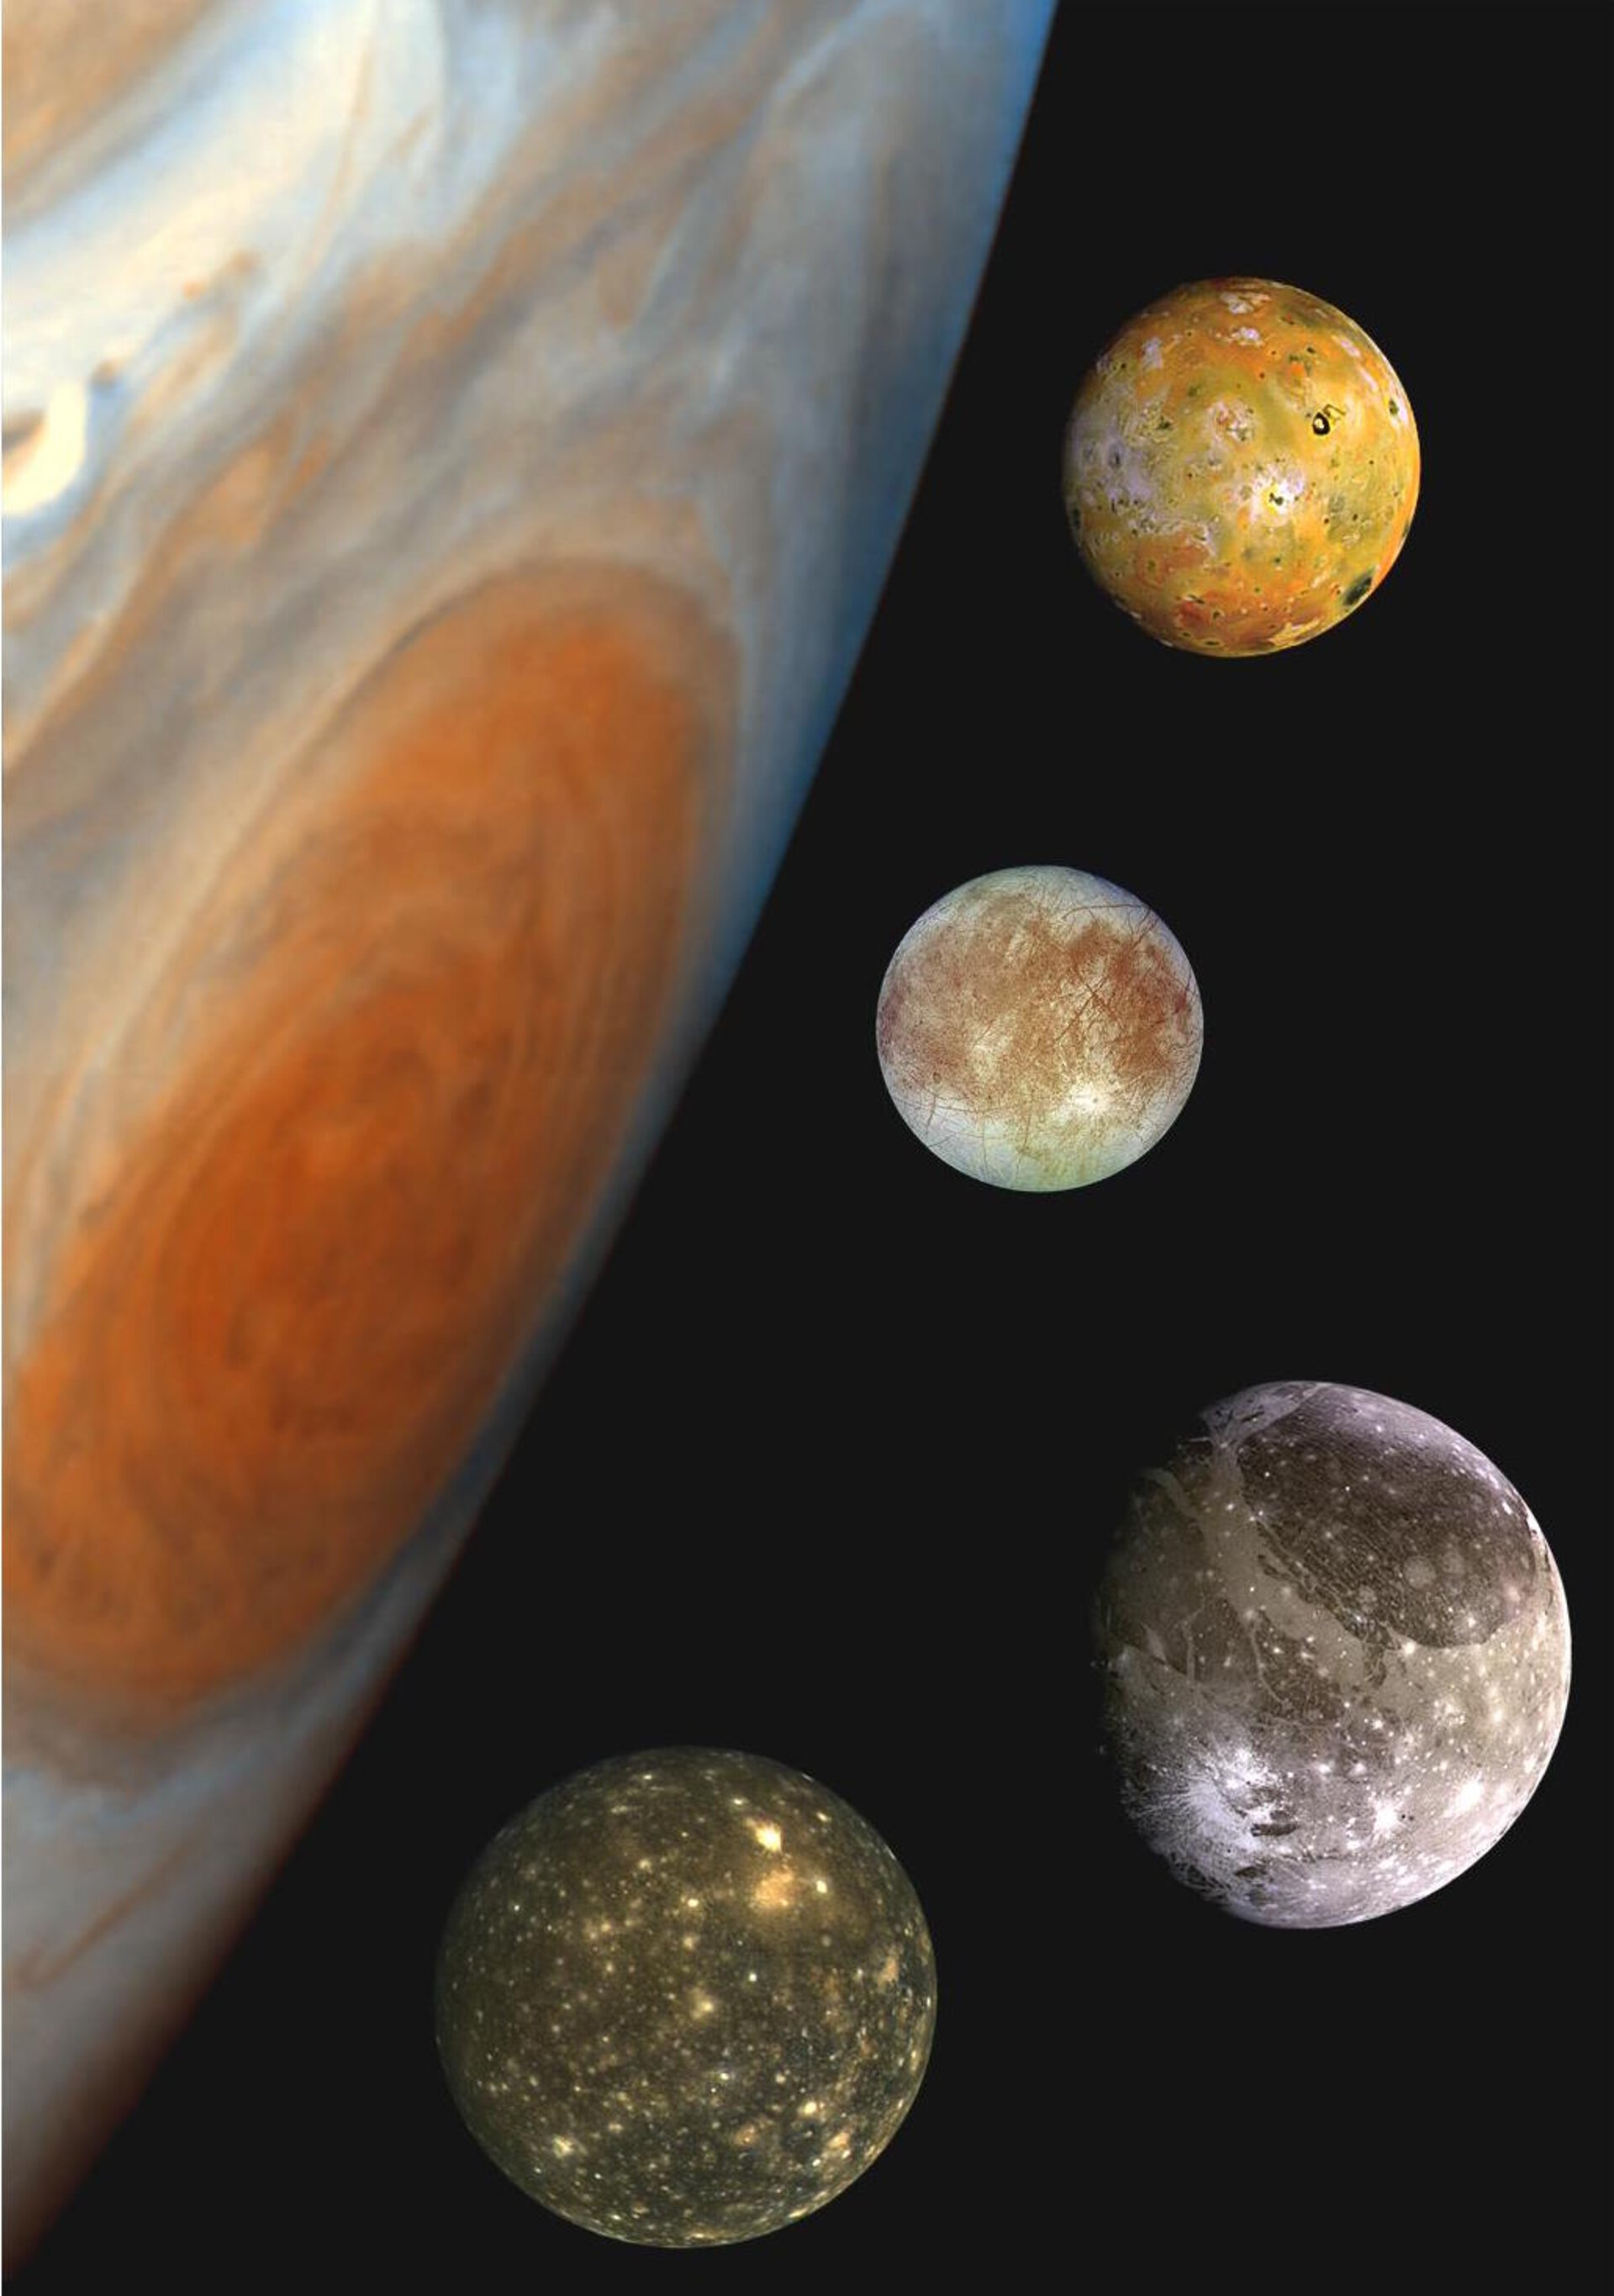 Image Source: European Space Agency (ESA)